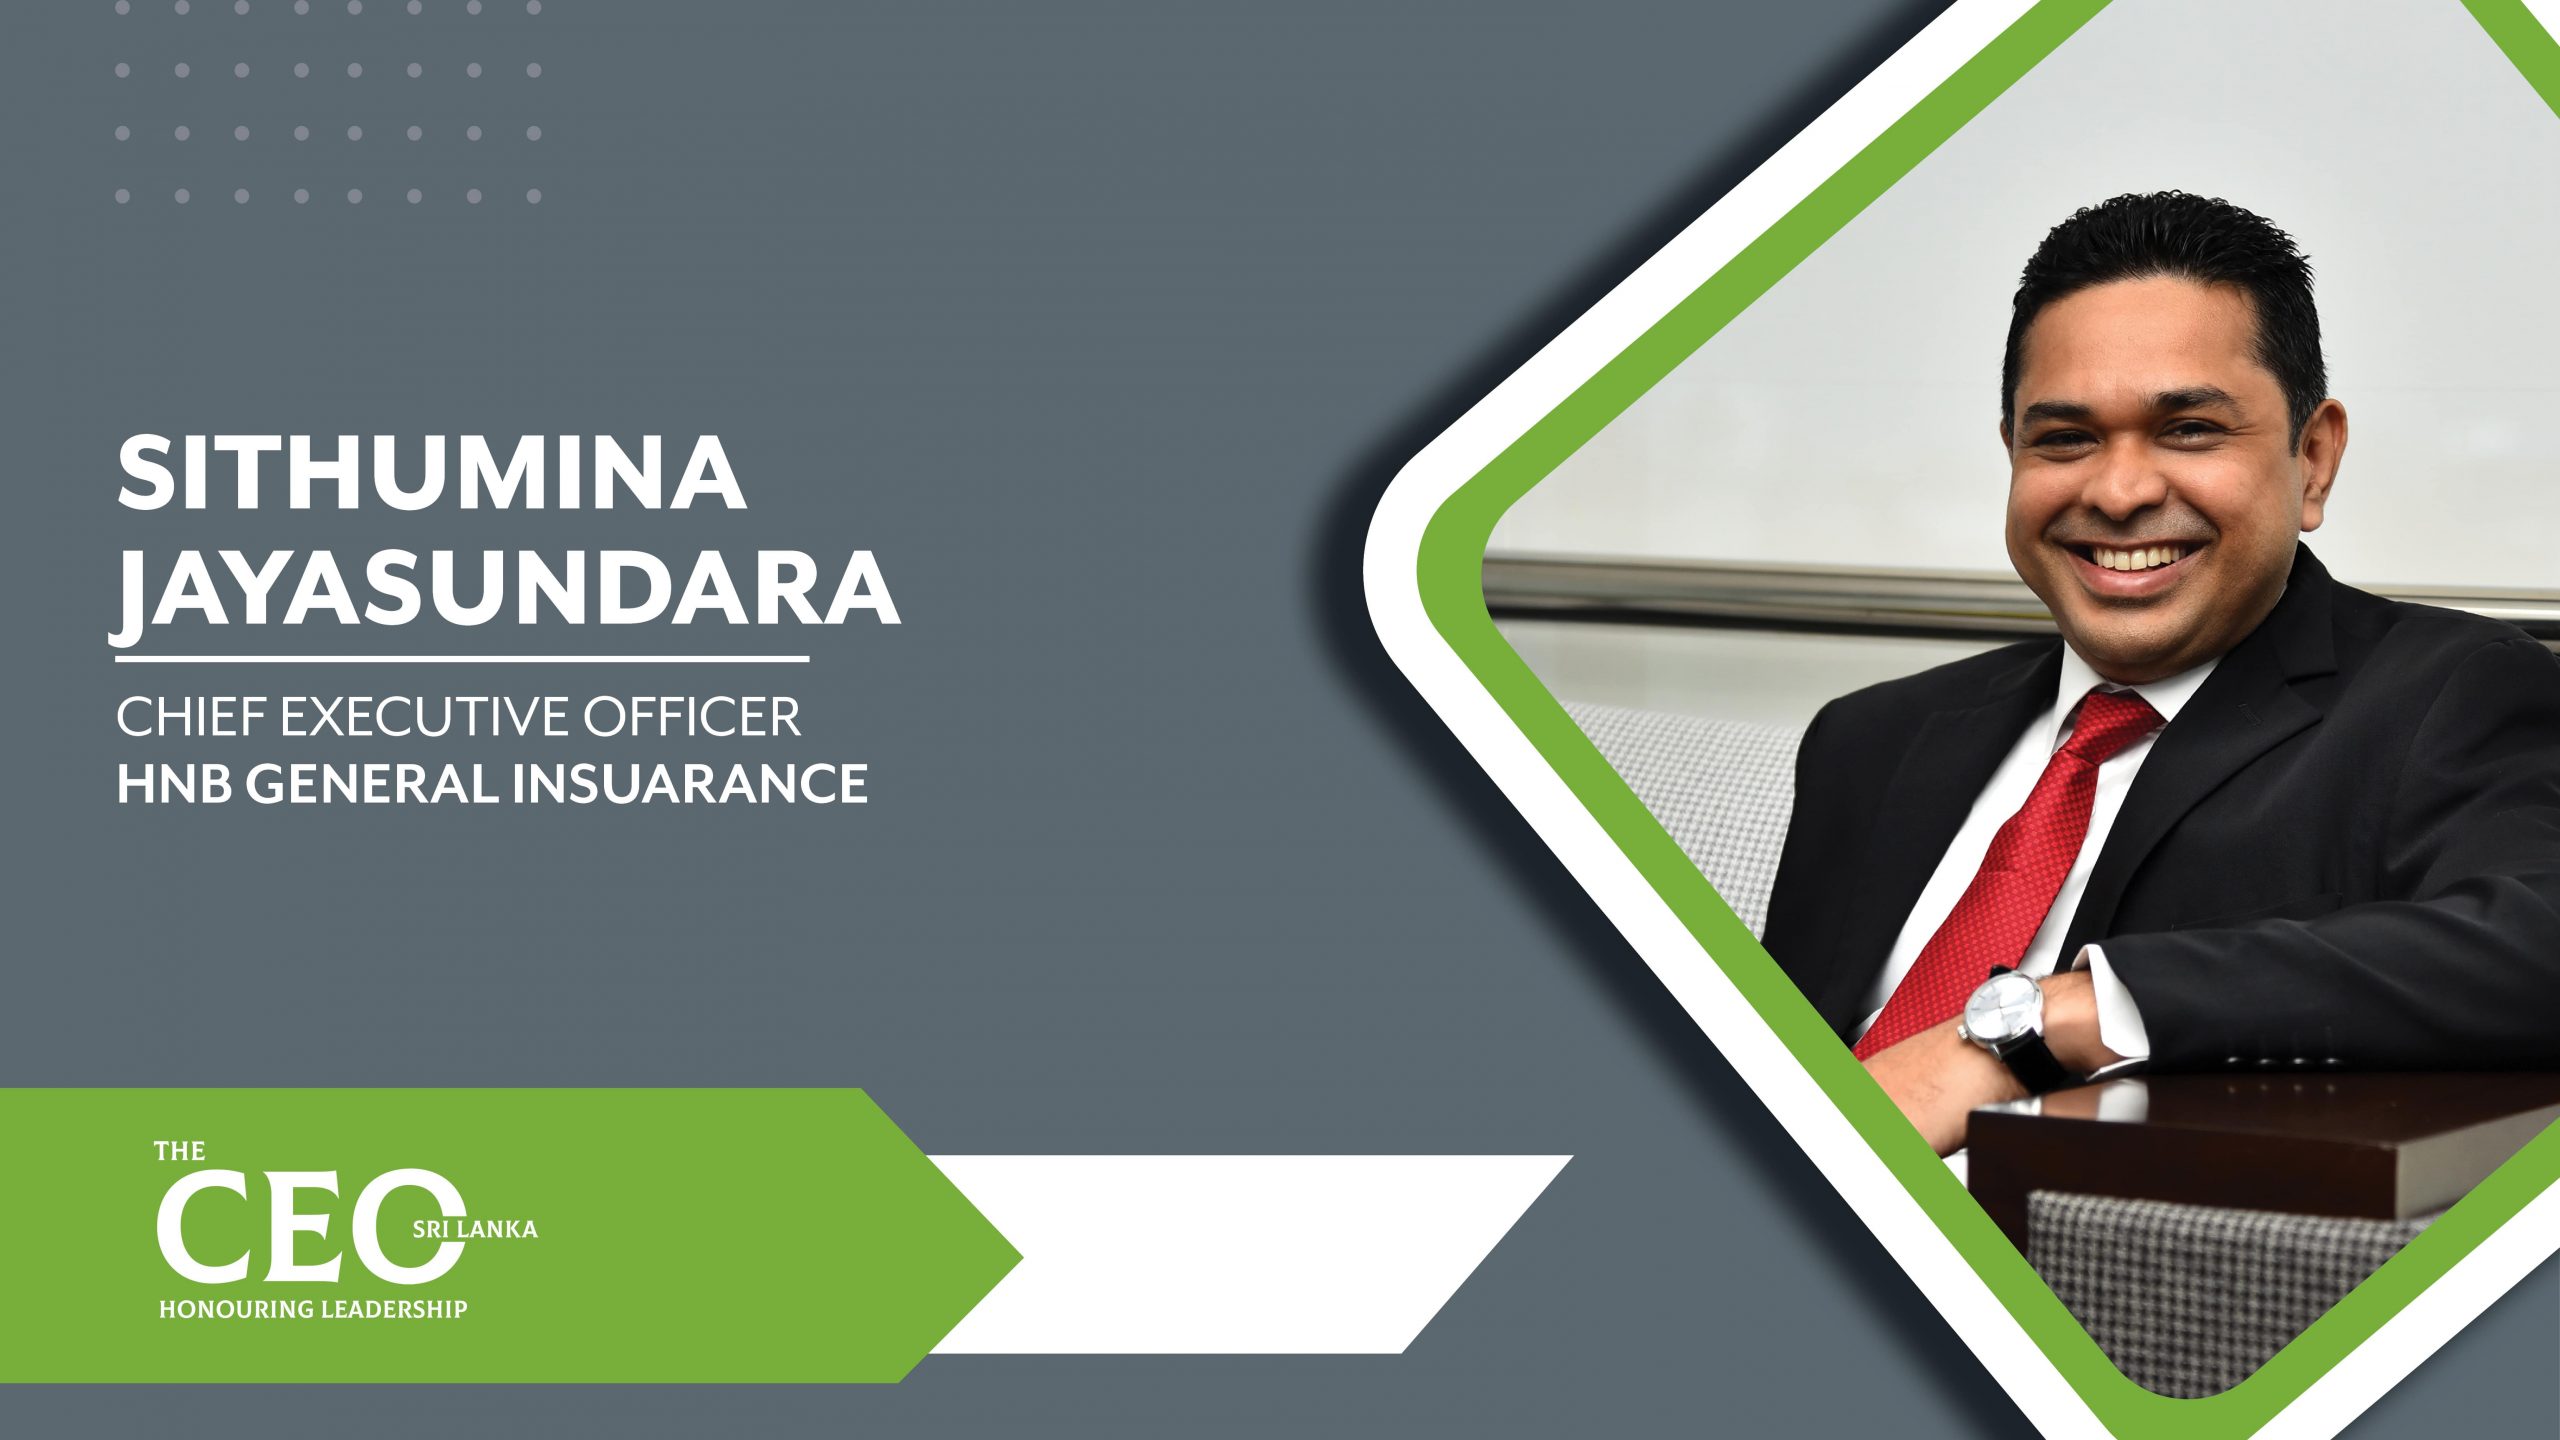 Creating the New Future of Insurance – Chief Executive Officer of HNB General Insurance, Sithumina Jayasundara